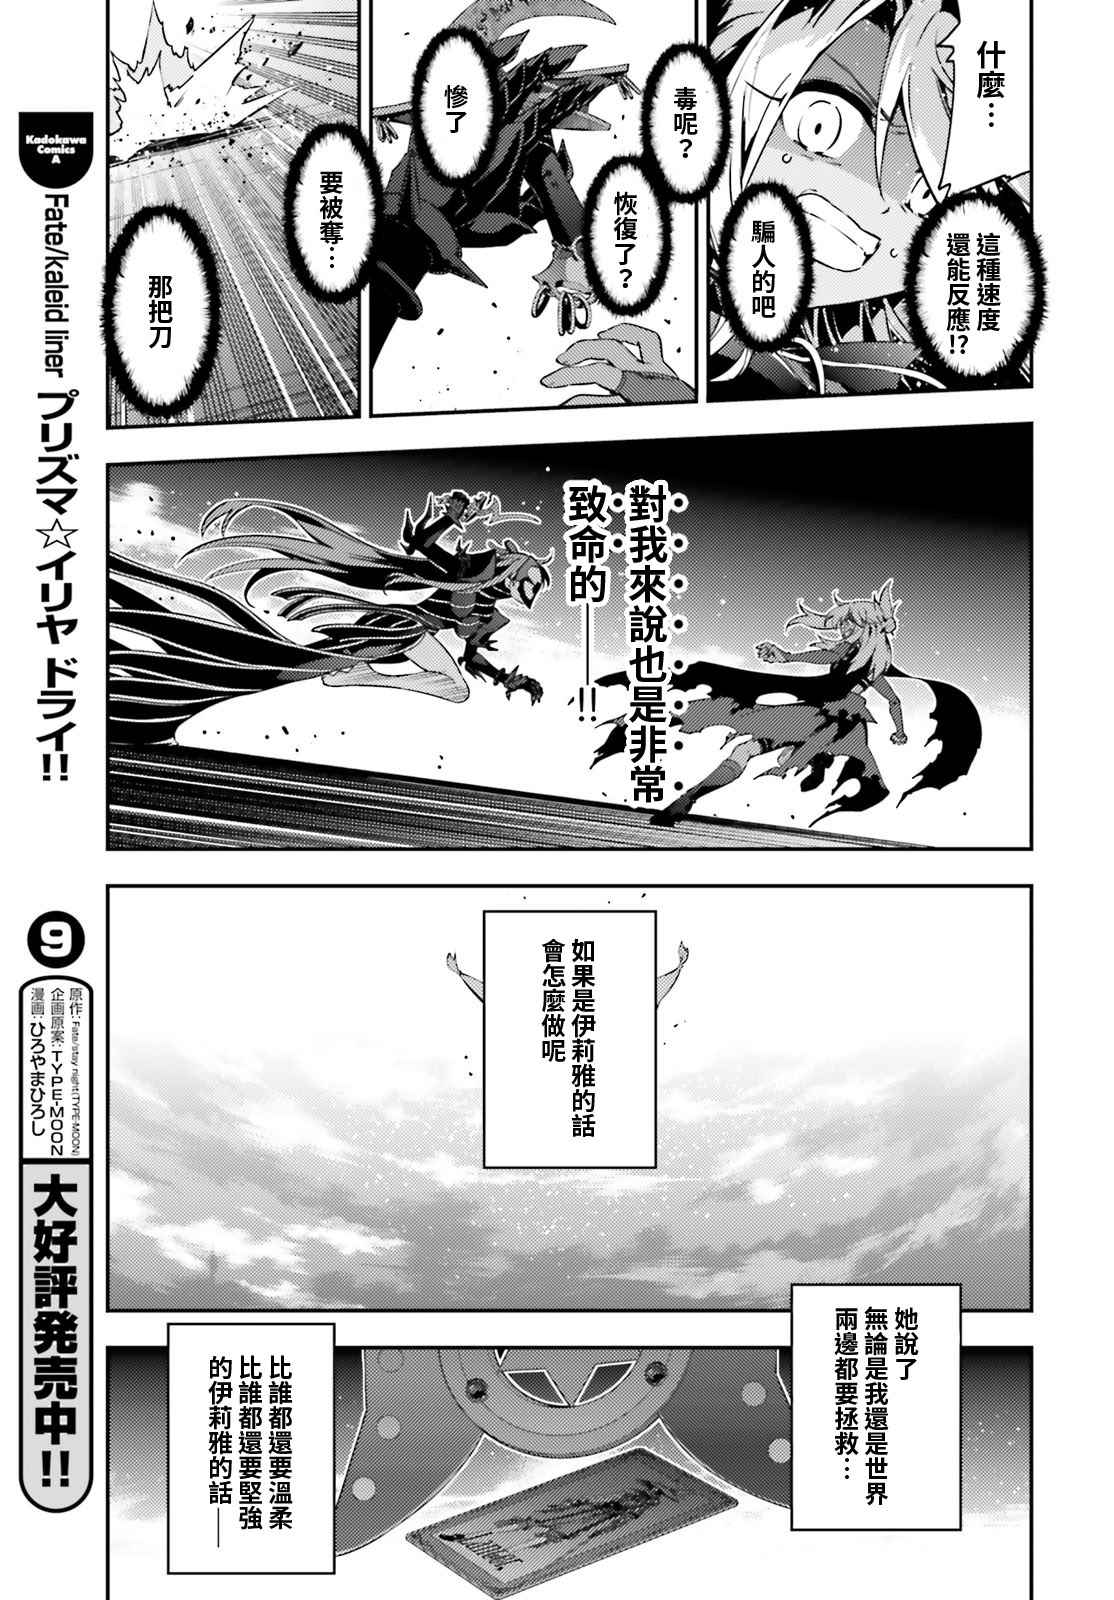 《Fate kaleid liner 魔法少女☆伊莉雅》漫画 Fate kaleid liner 057话